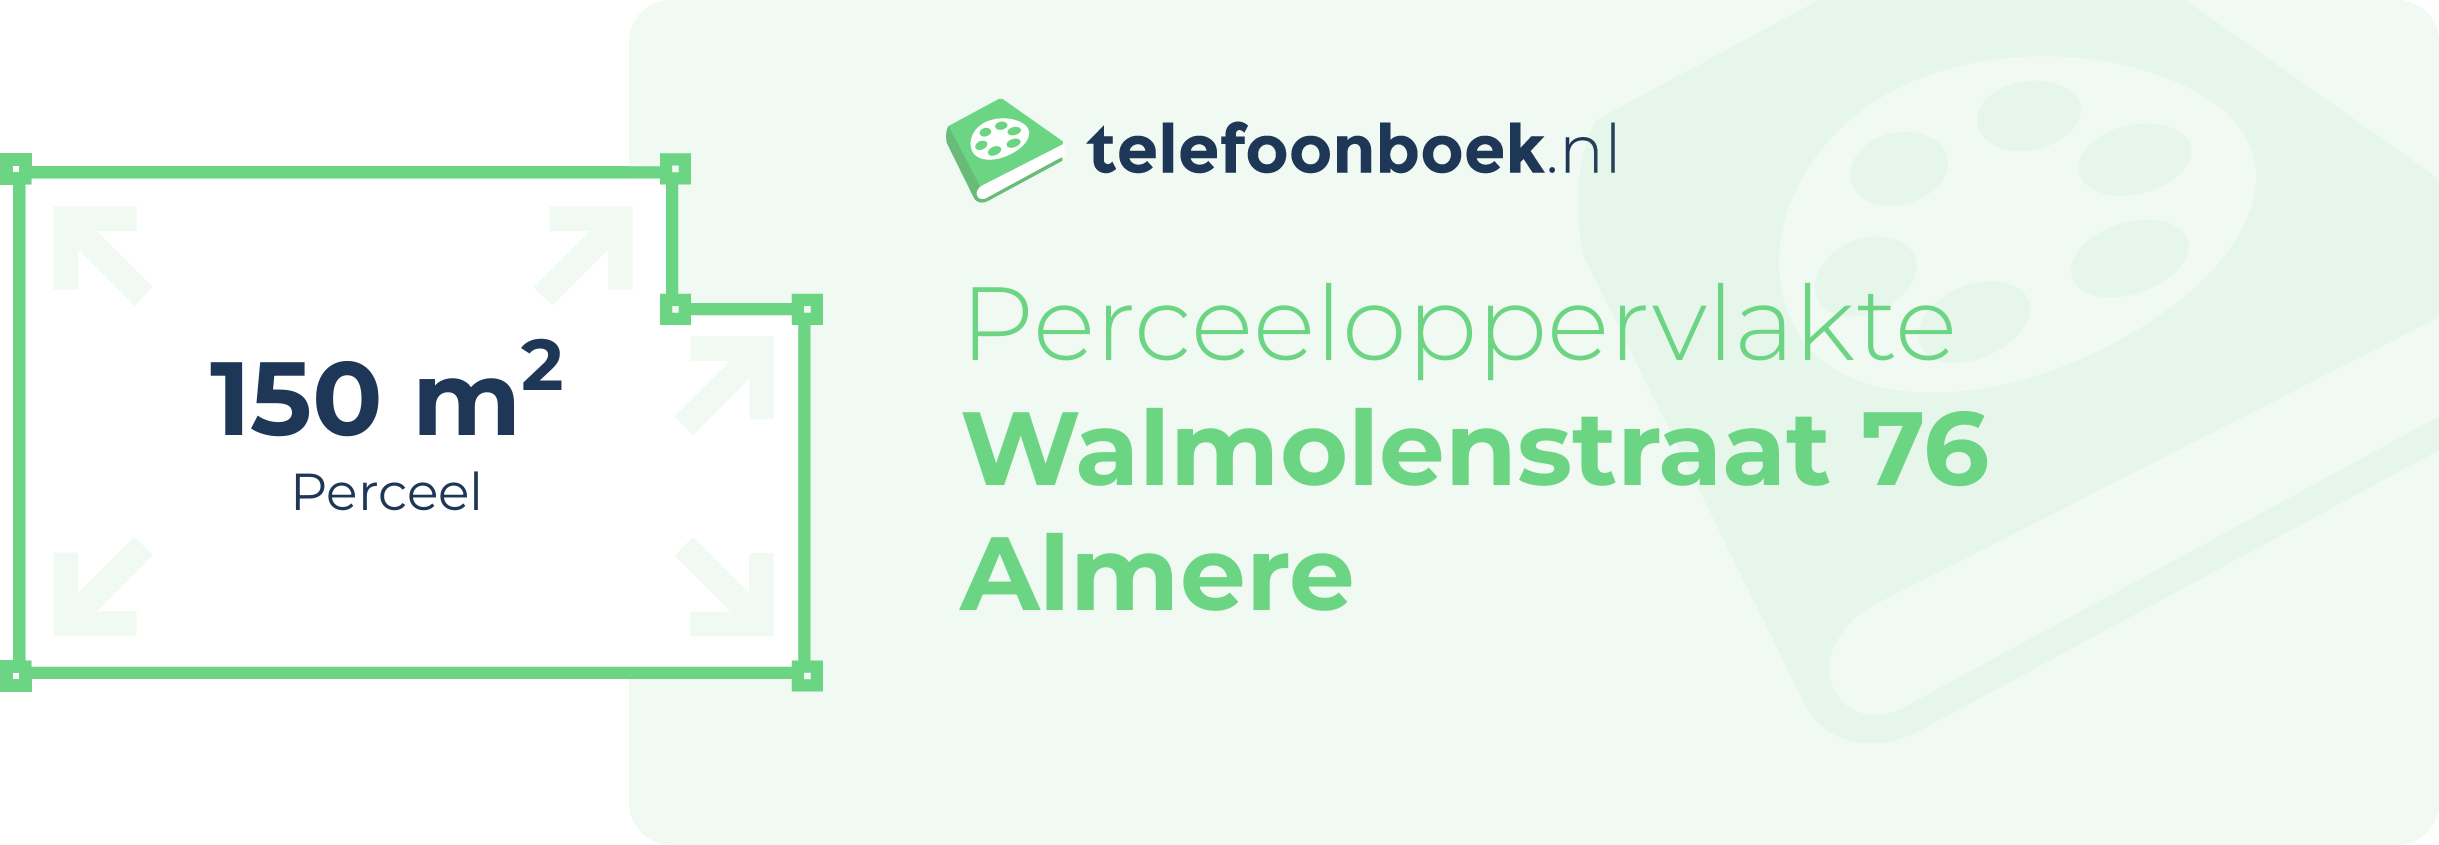 Perceeloppervlakte Walmolenstraat 76 Almere